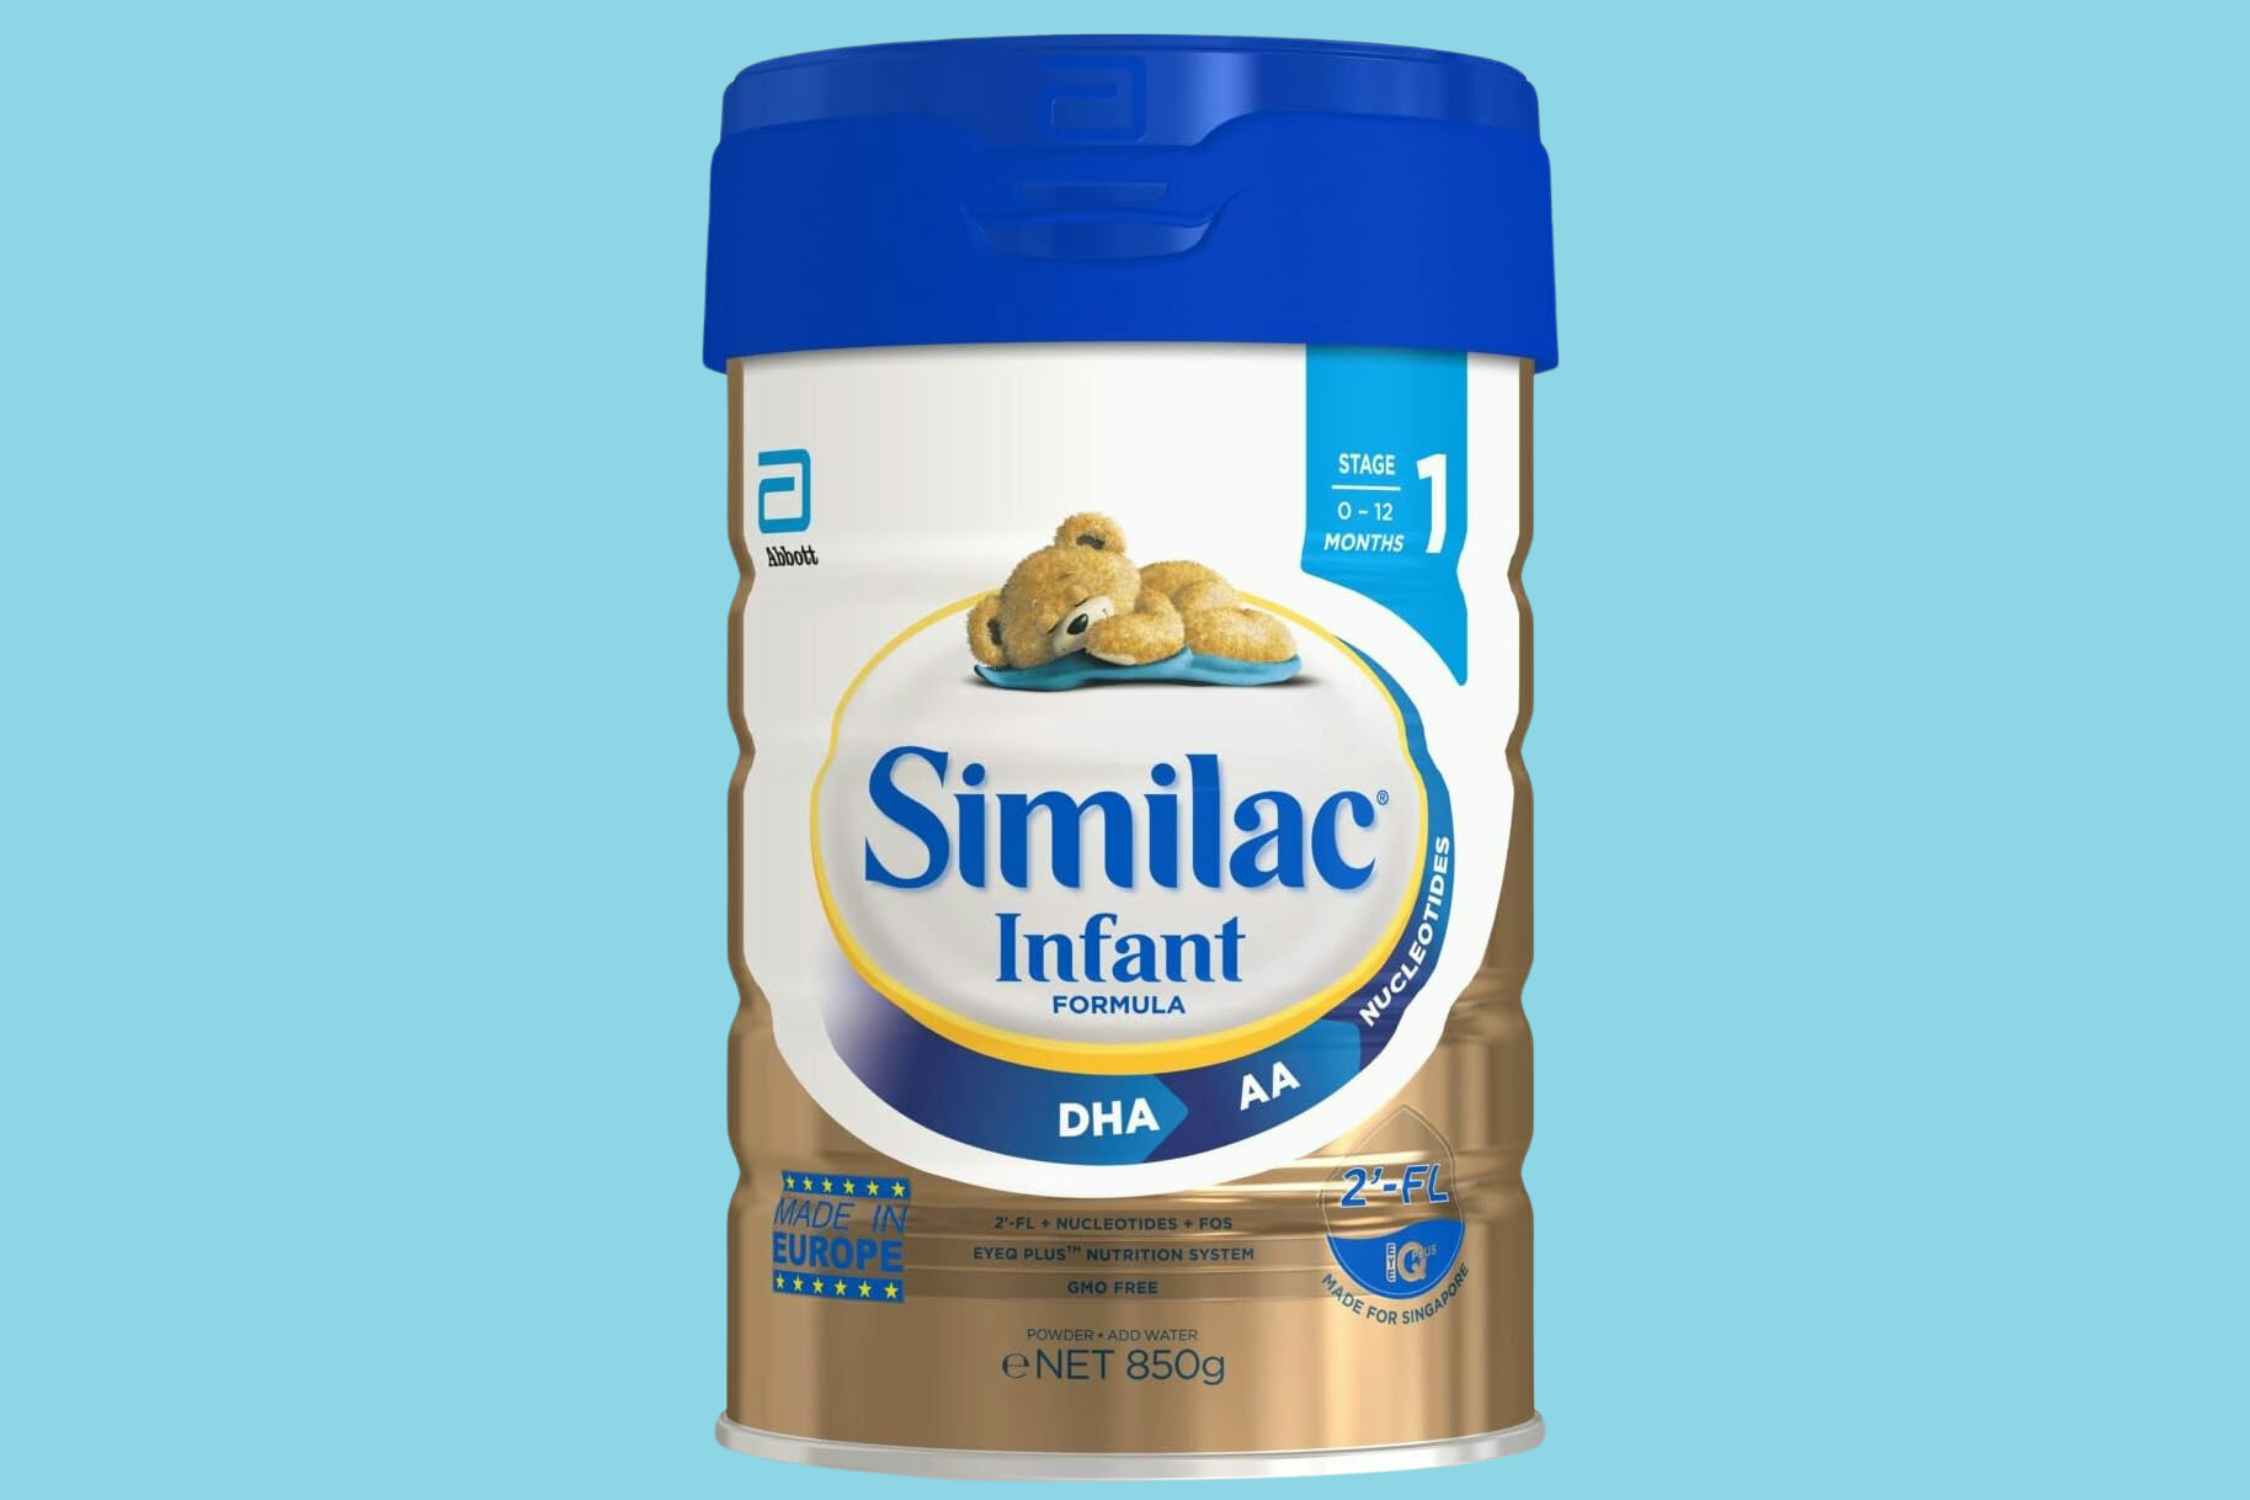 Rare 50% Off Coupon on Similac Infant Formula — Pay $8.66 on Amazon